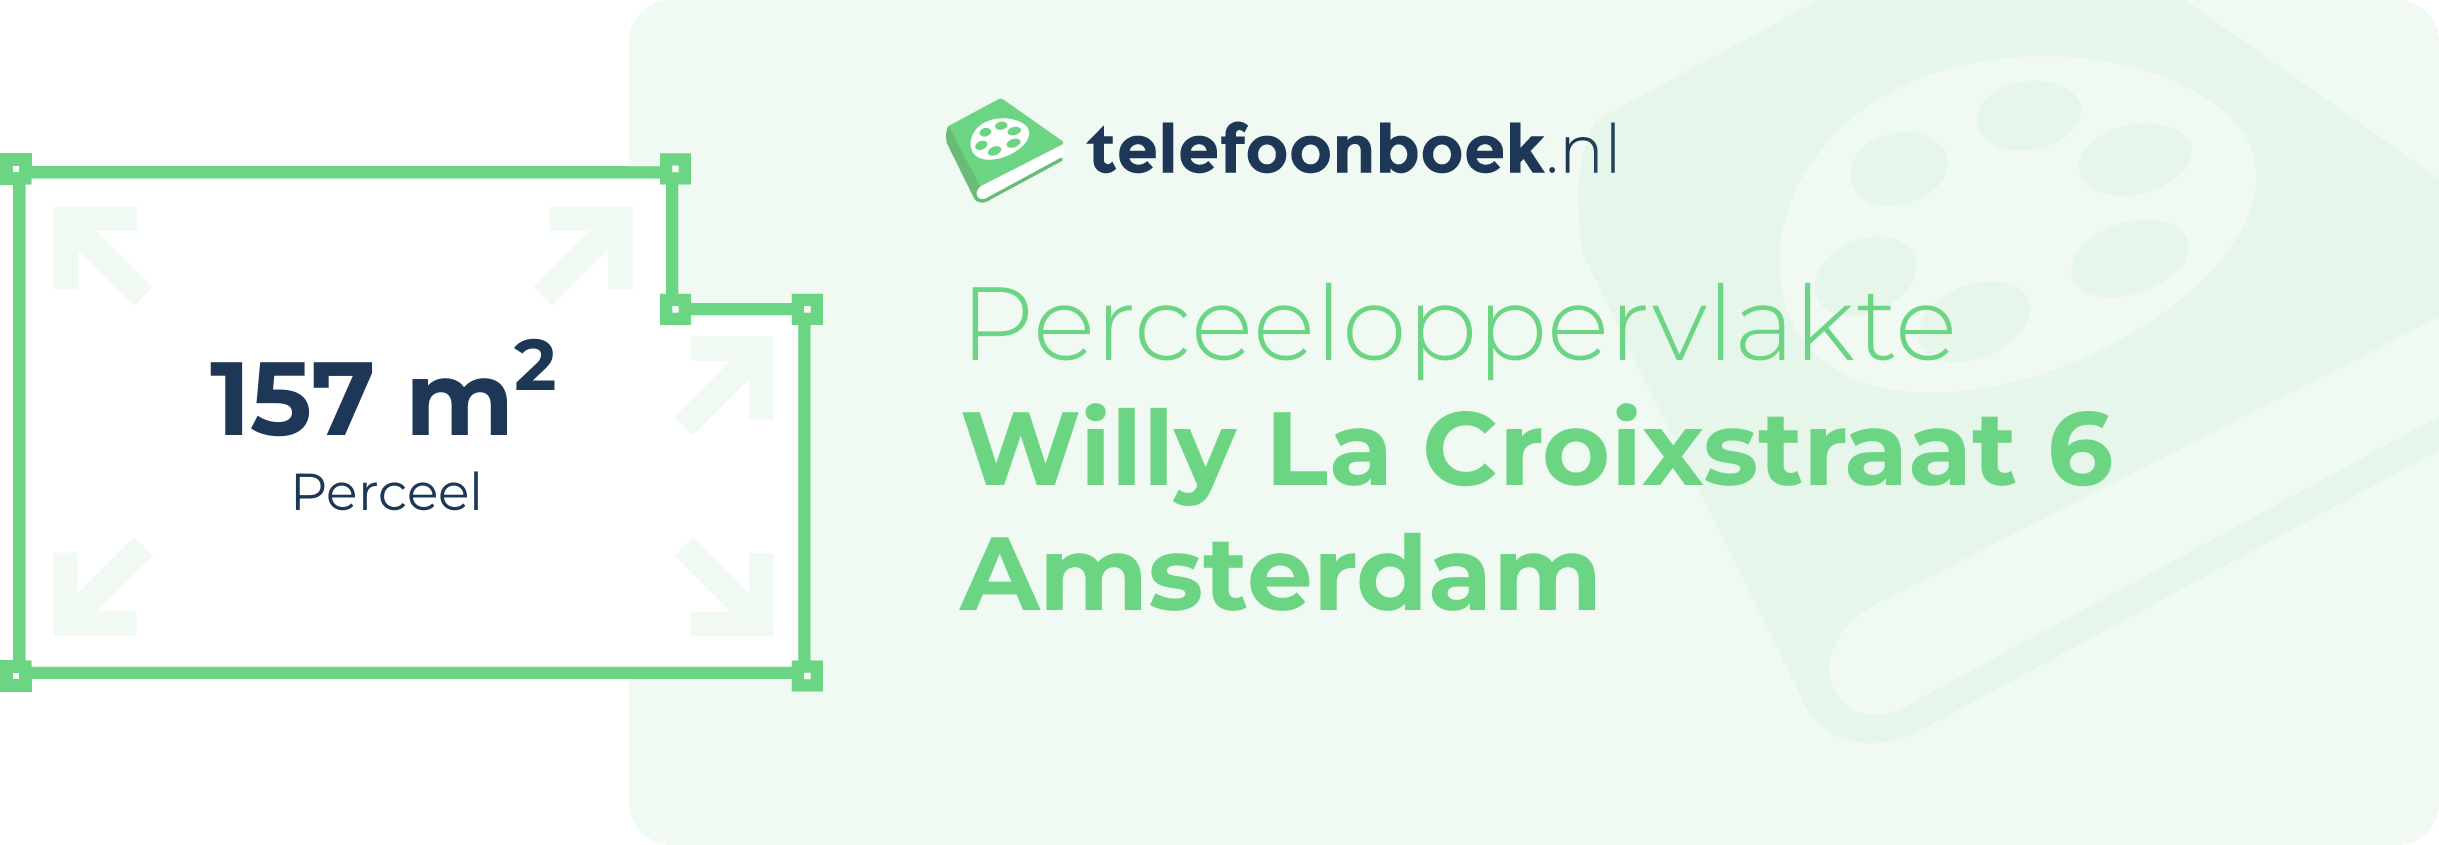 Perceeloppervlakte Willy La Croixstraat 6 Amsterdam